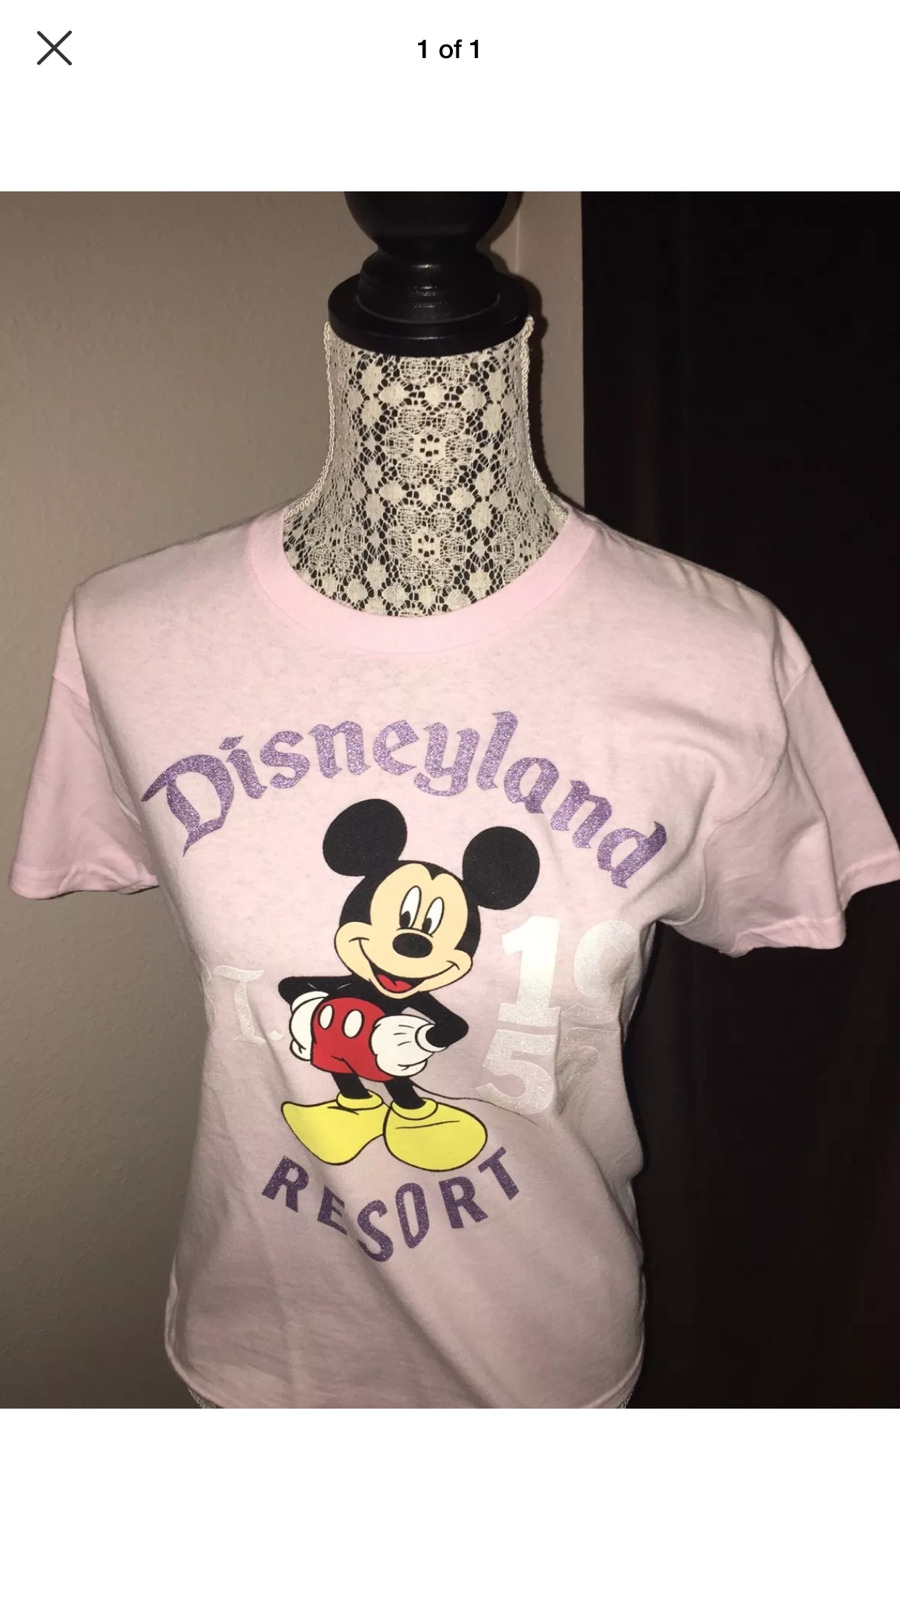 Brand New Disney kids shirt medium